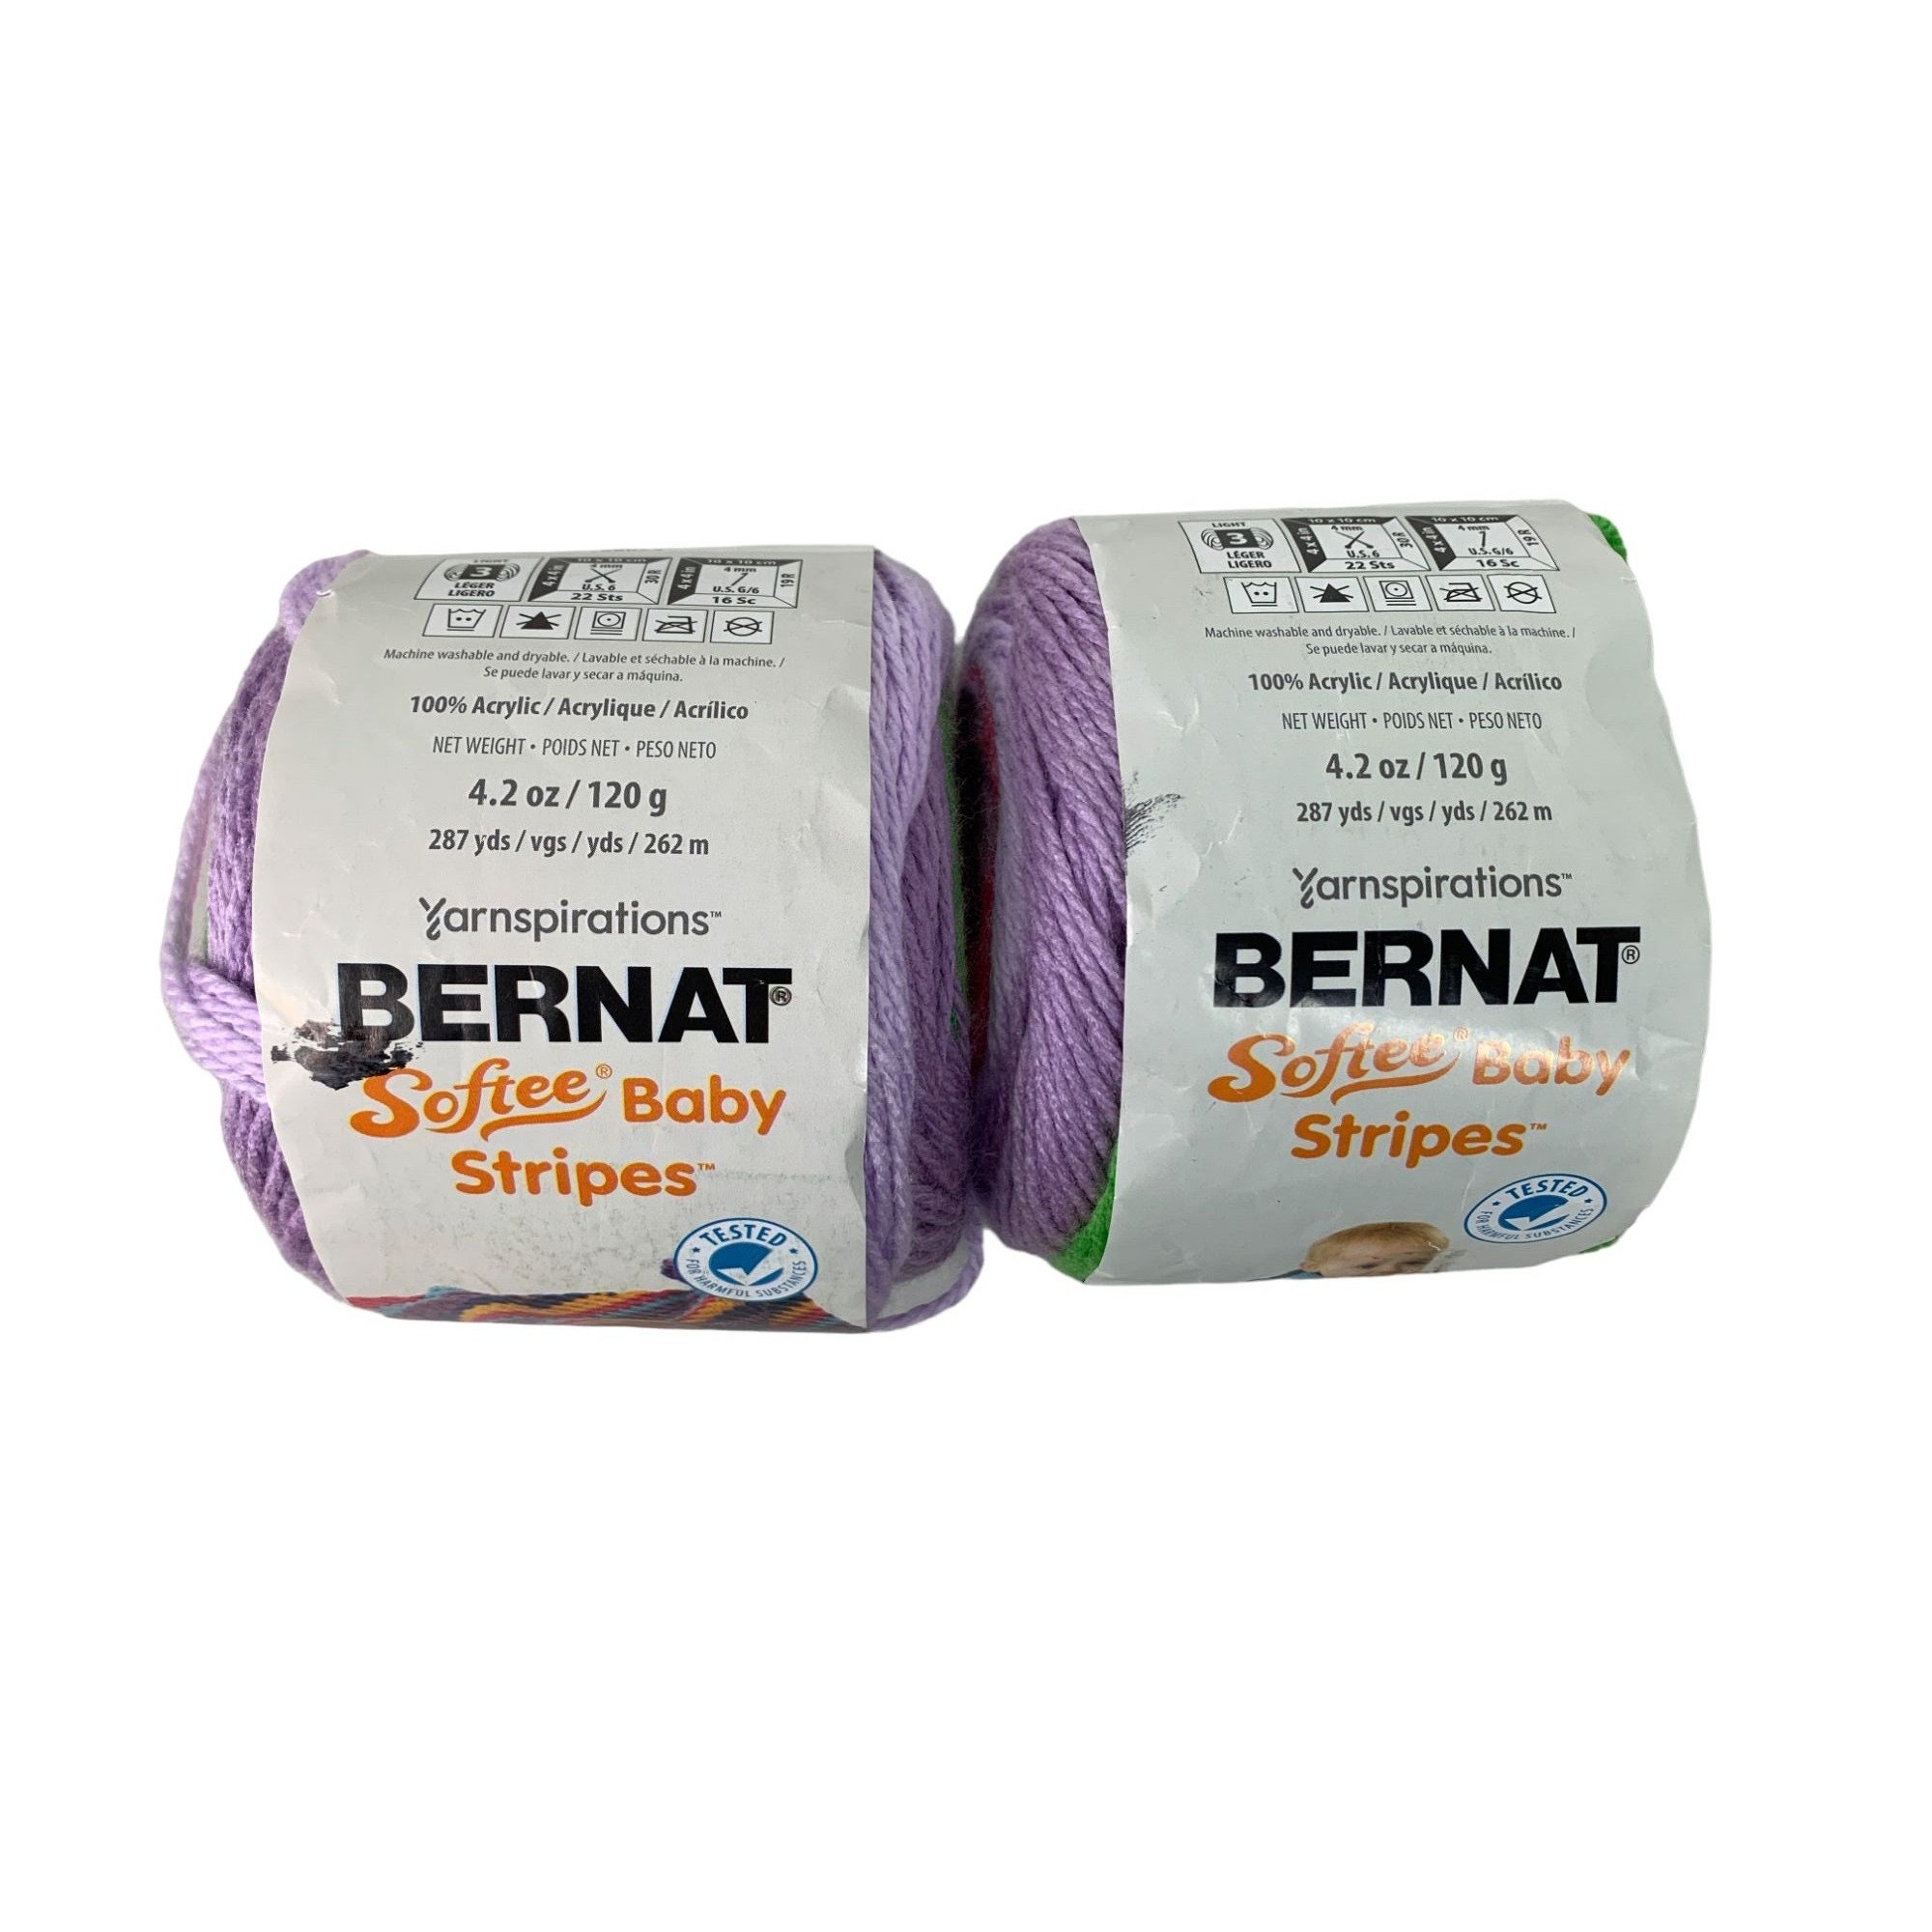 Bernat Softee Baby Stripes Yarn (250g/8.8oz) - Clearance Shades, Yarnspirations